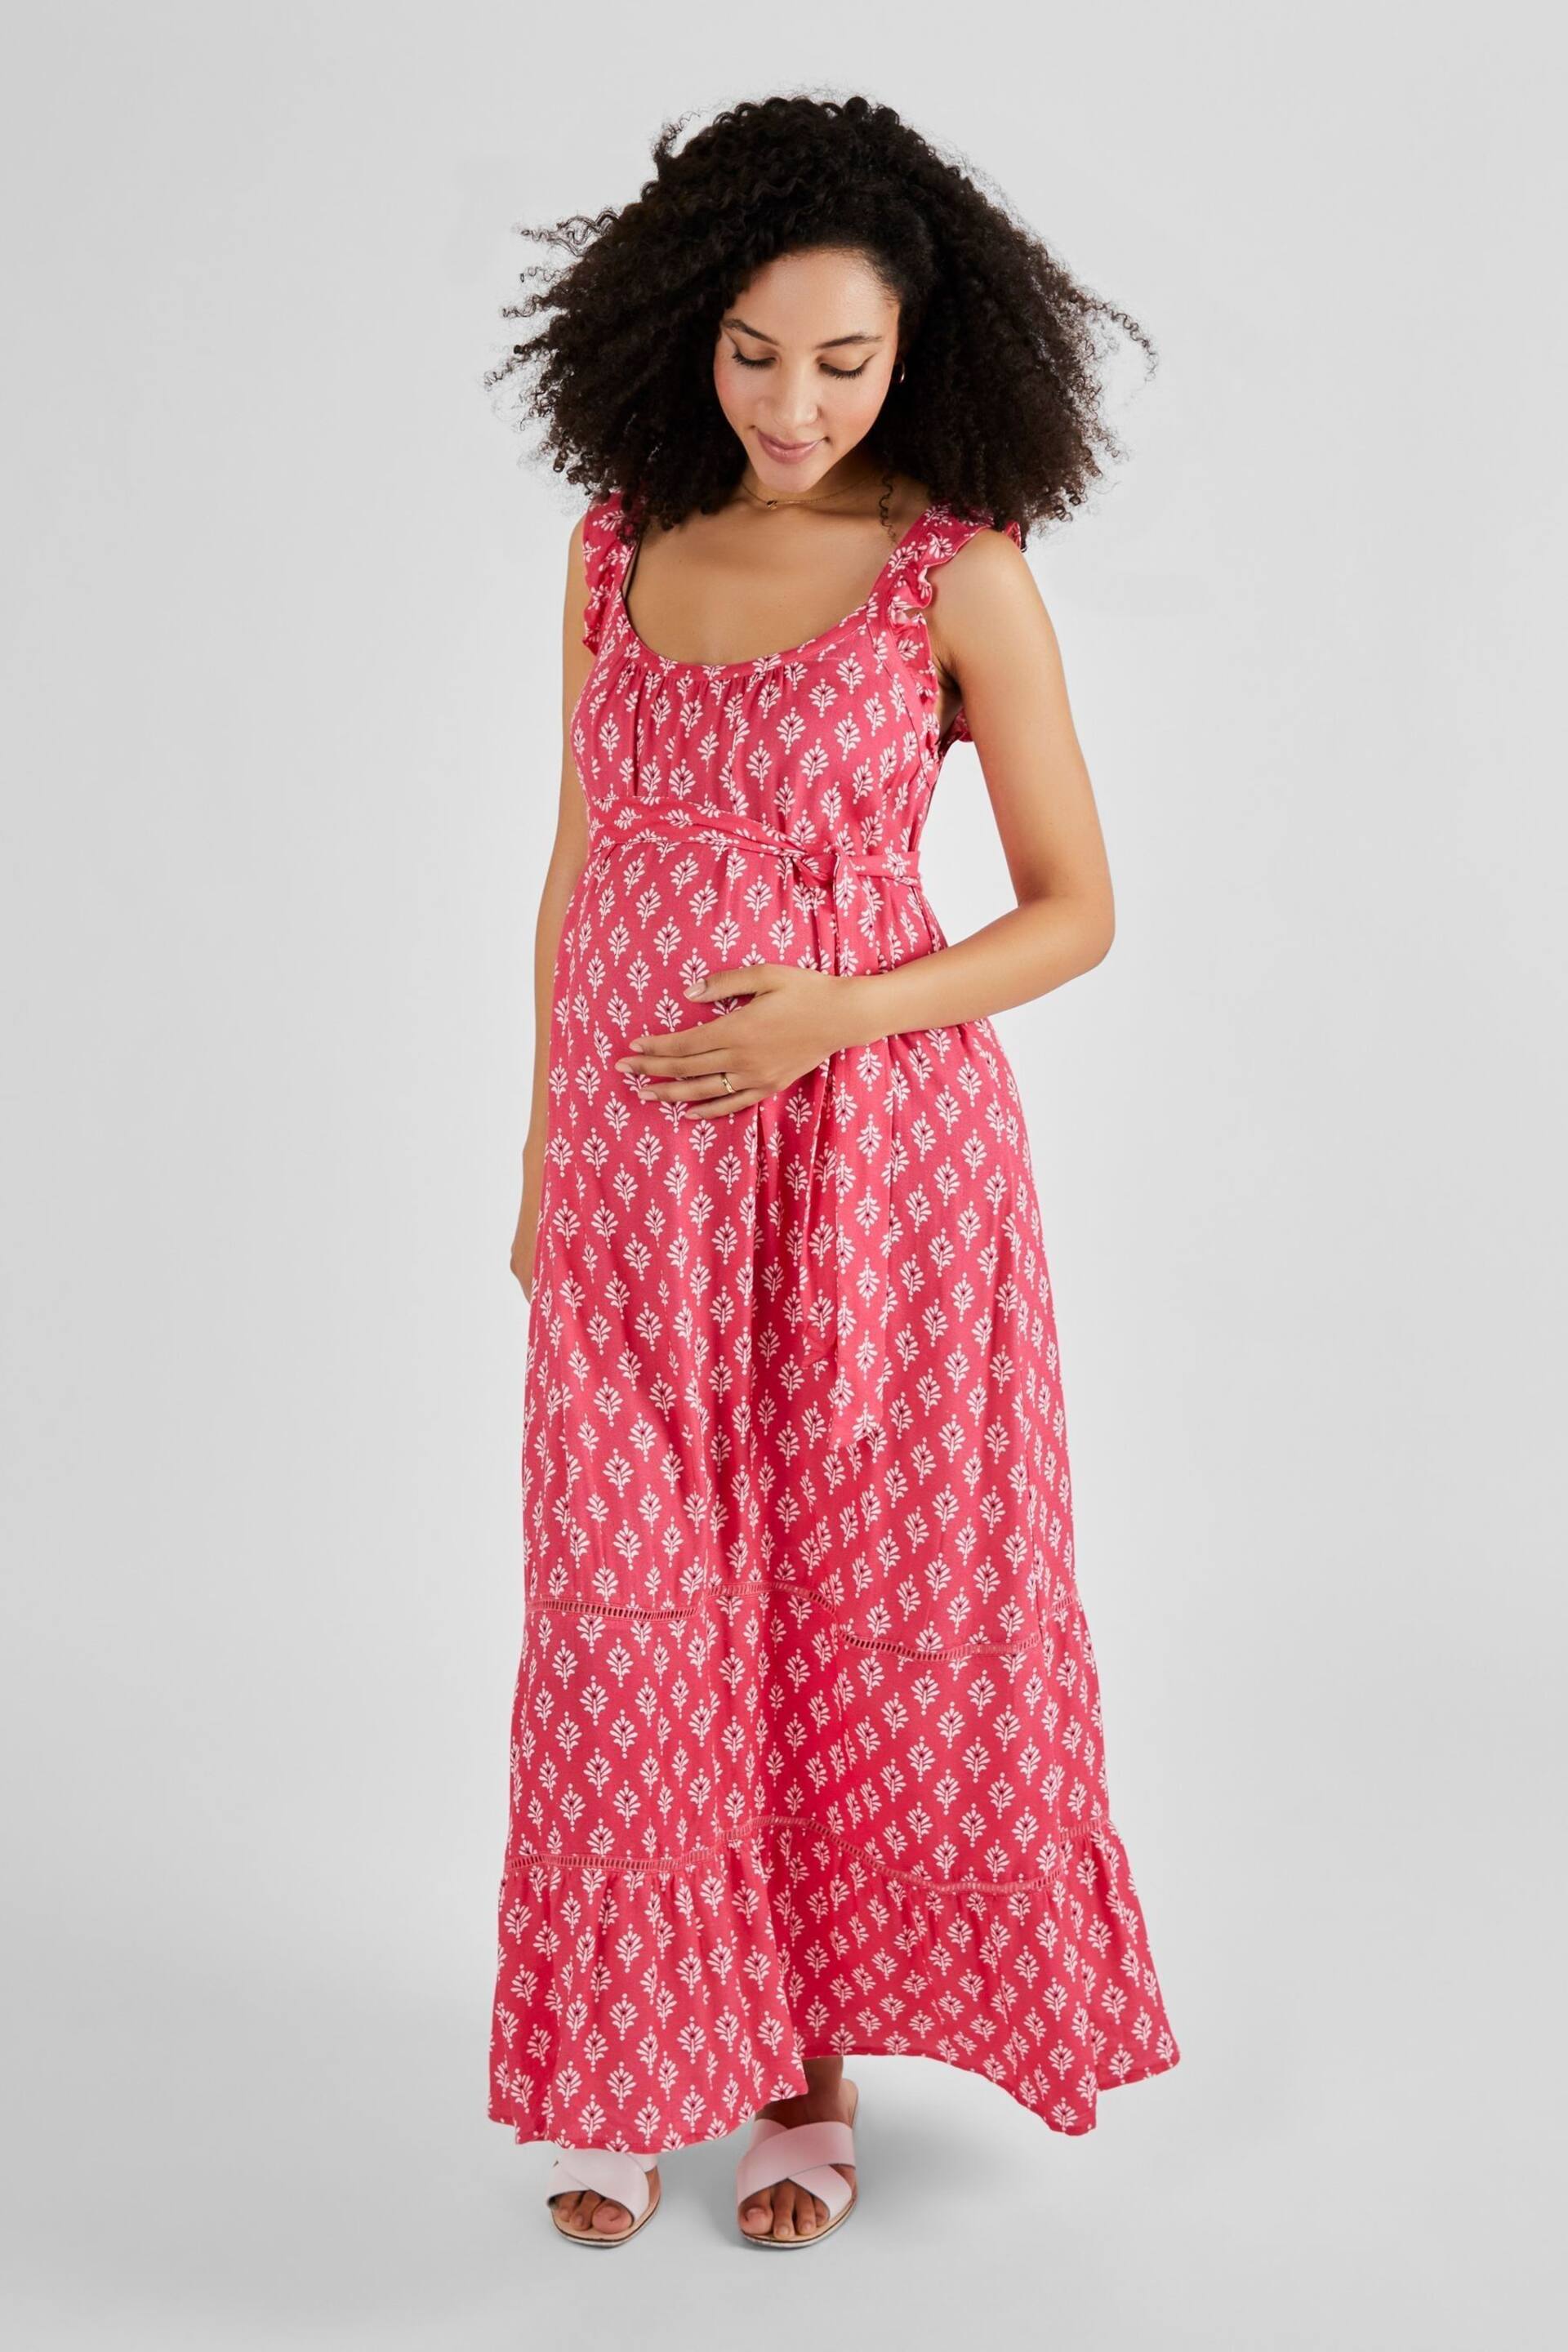 JoJo Maman Bébé Pink Batik Print Flutter Sleeve Maternity Maxi Dress - Image 1 of 5